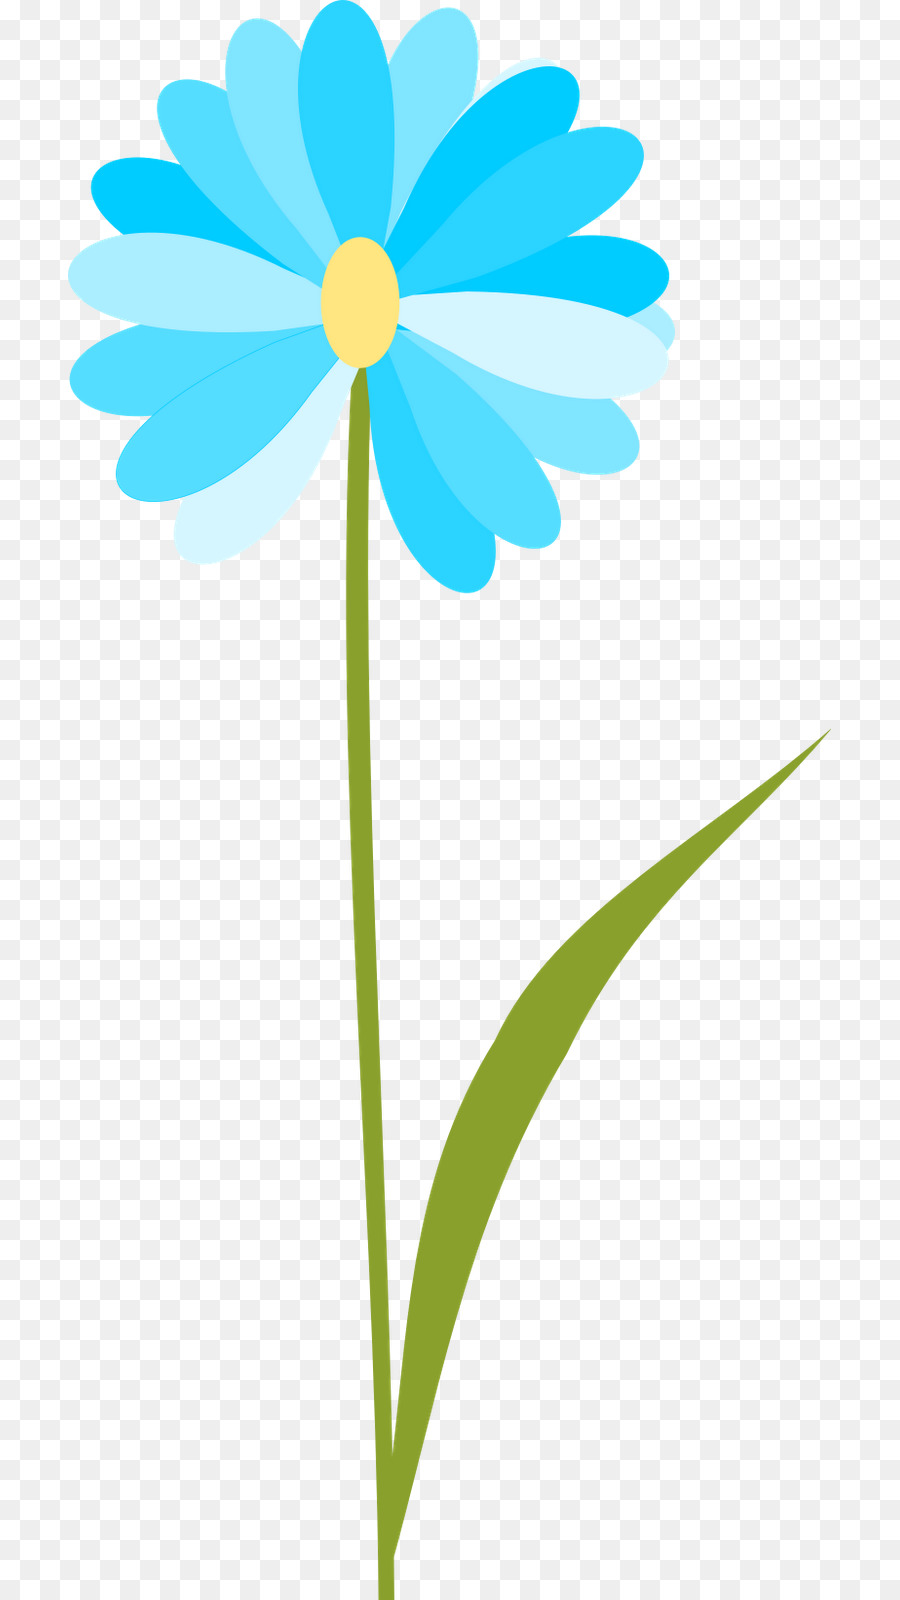 Flower Clip art - No Plants Cliparts png download - 763*1600 - Free Transparent Flower png Download.